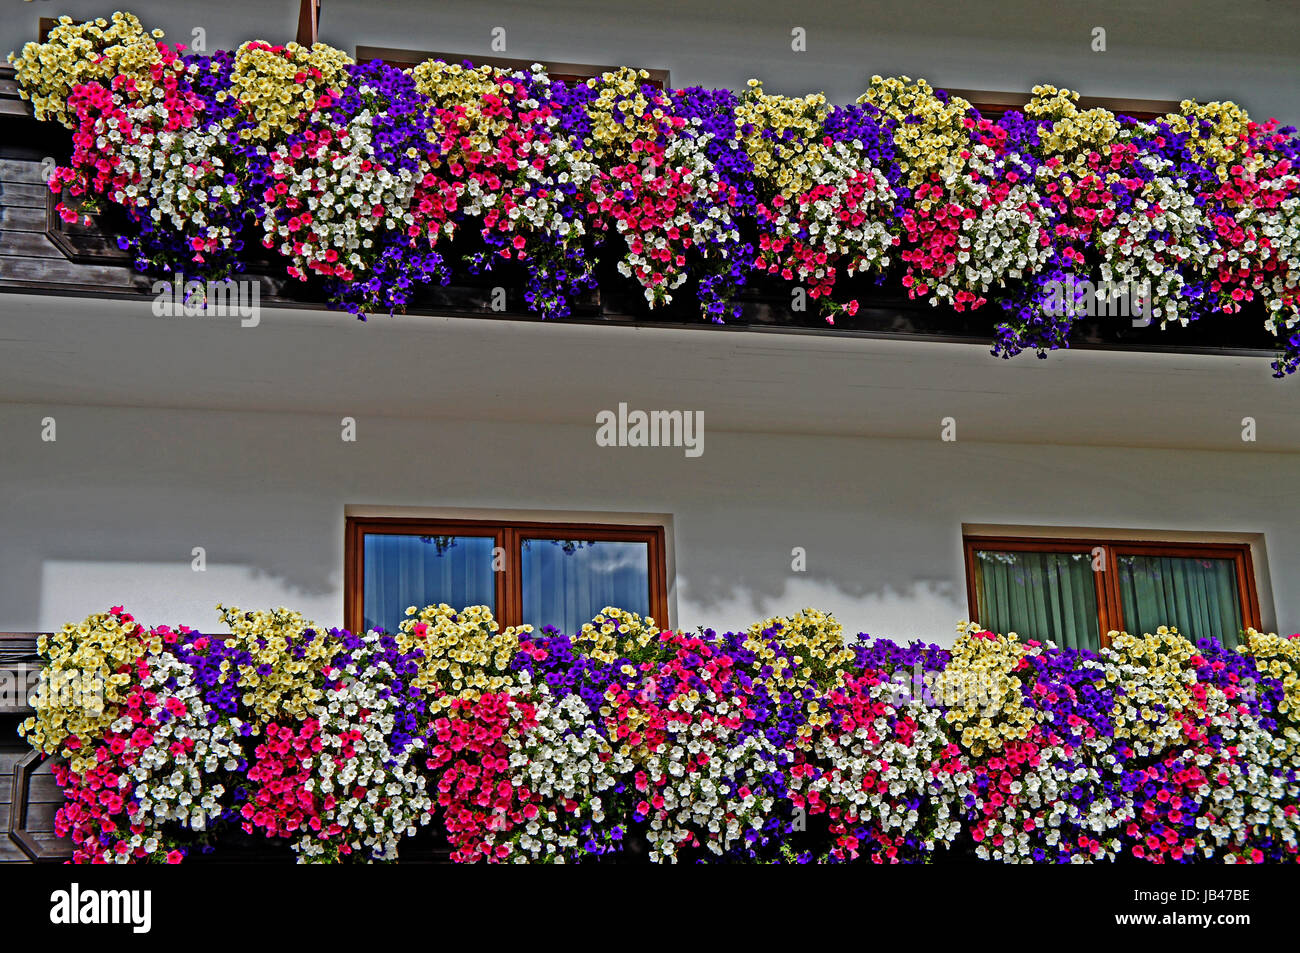 Bunte Blumen an den Balkons eines Hauses, blaue, weiße, gelbe und pinkfarbene Petunien Colorful flowers on the balconies of a house, blue, white, yellow and pink petunias Stock Photo